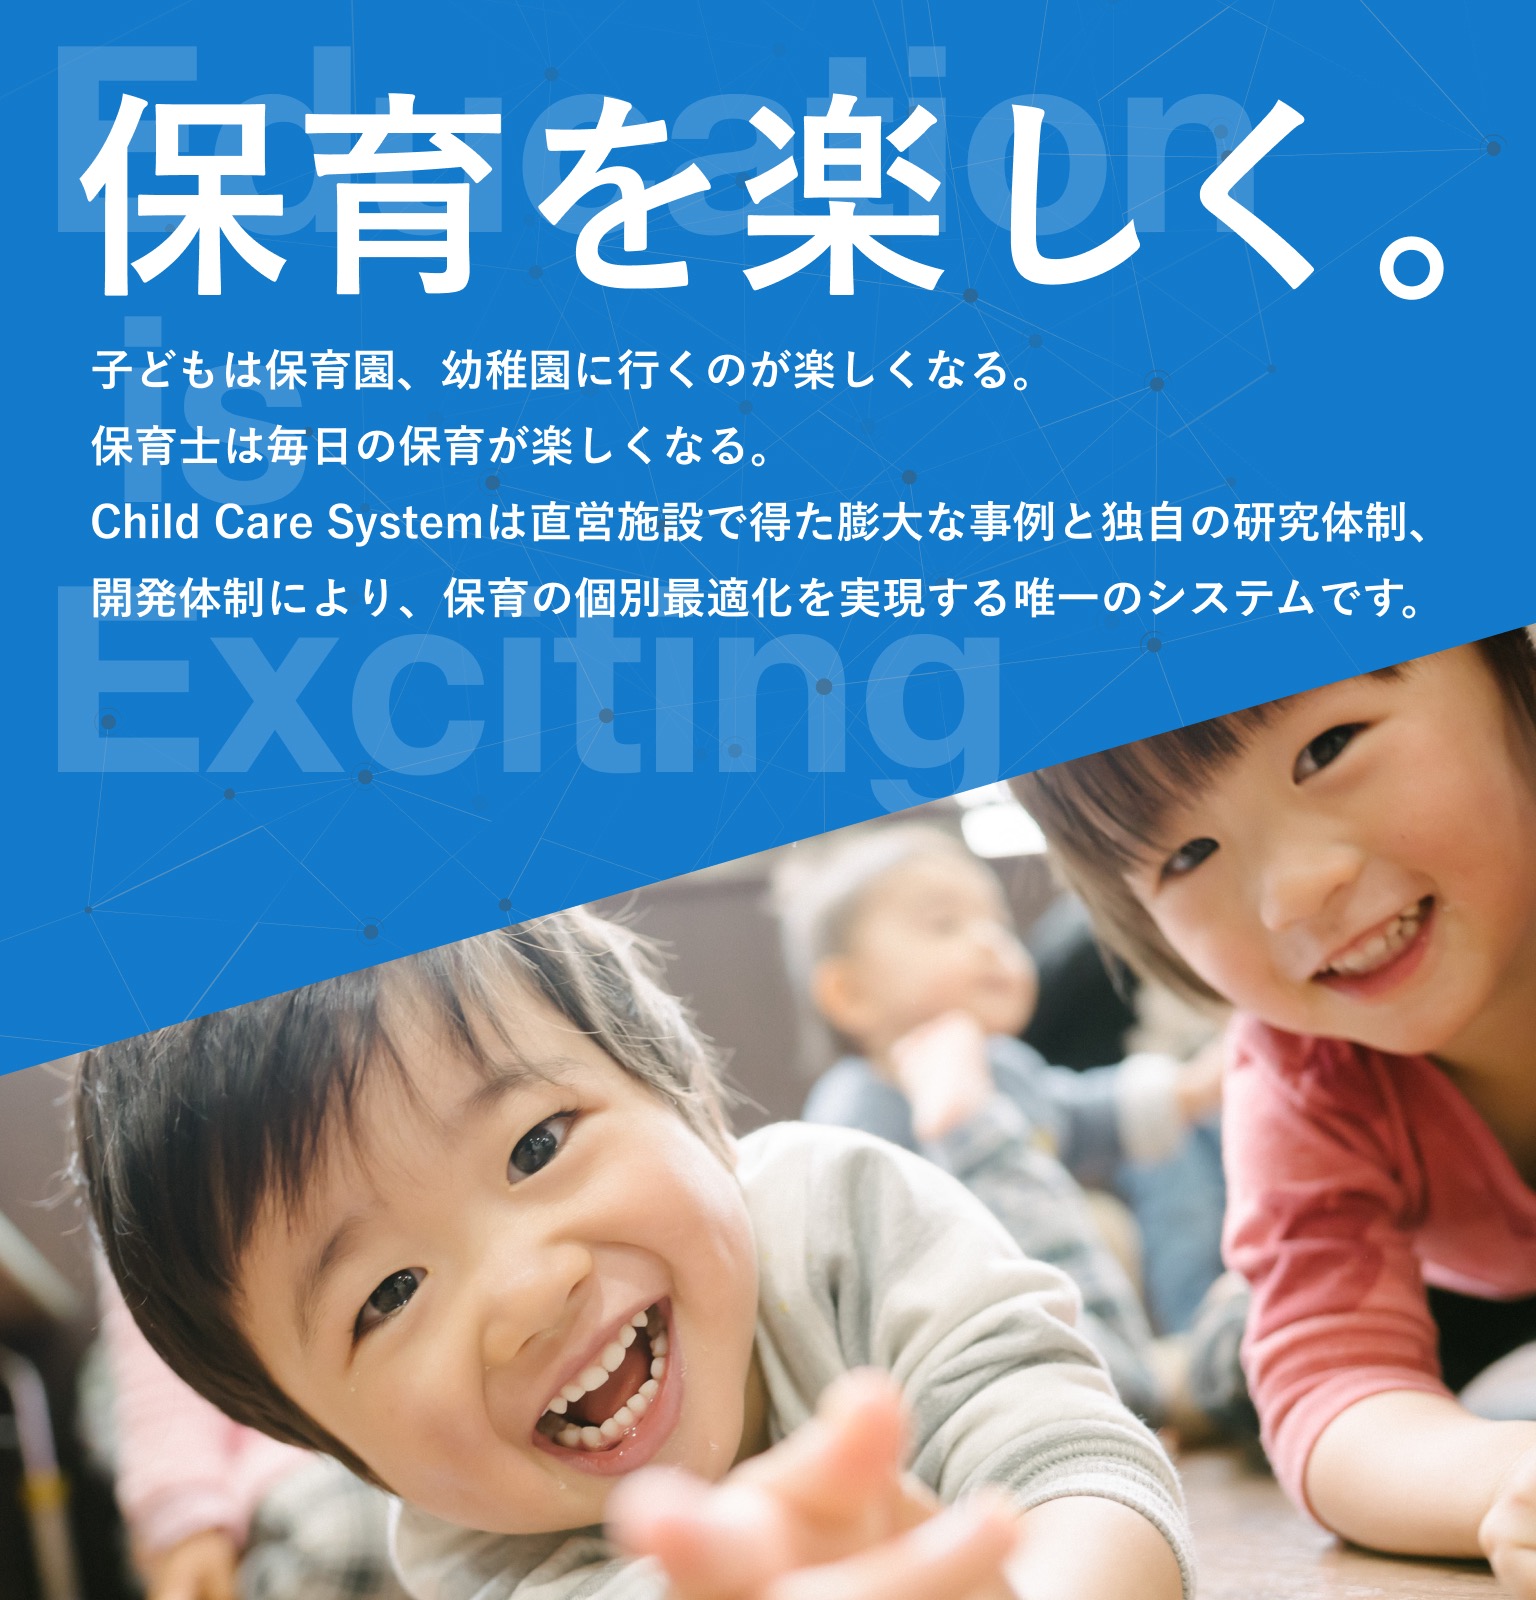 Child Care System